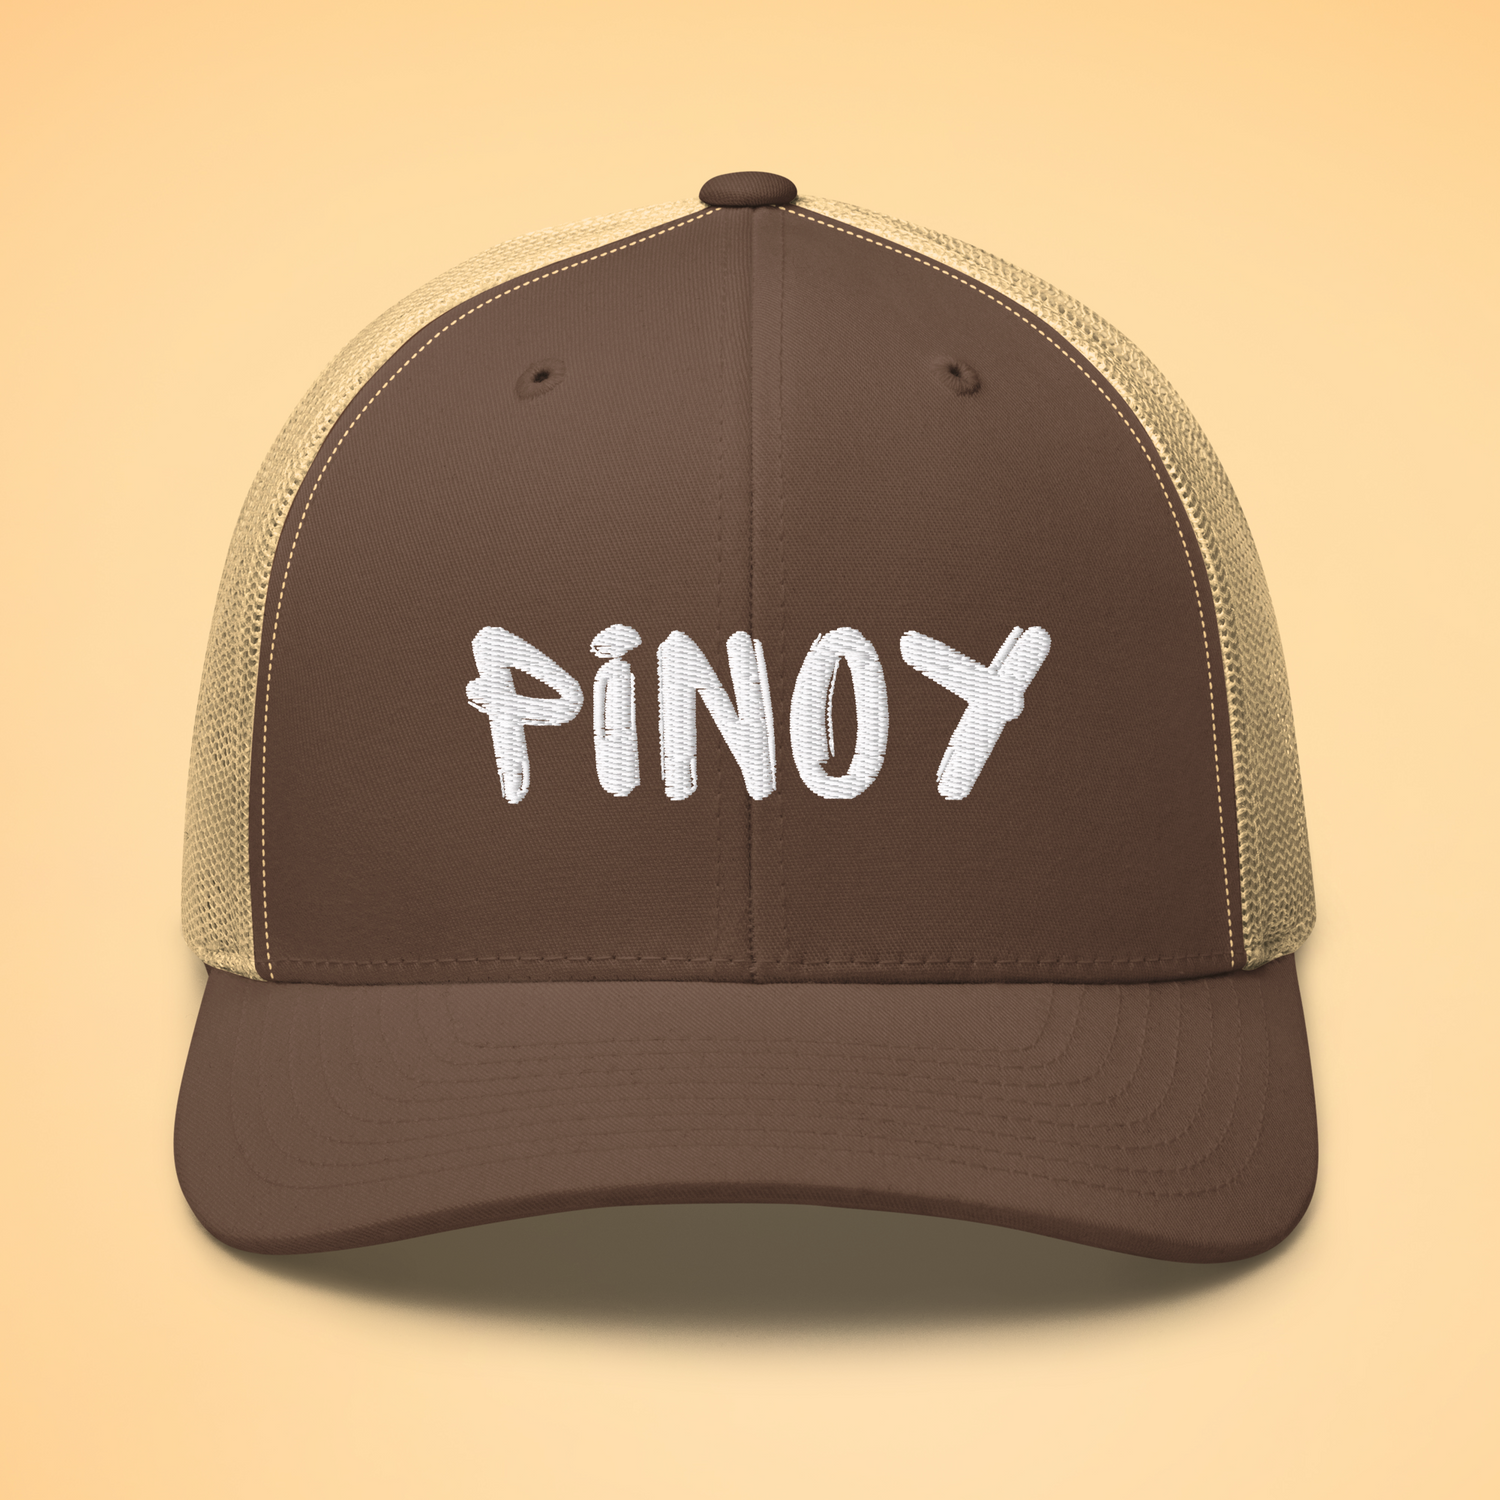 Filipino Pinoy Embroidered Mesh Back Trucker Cap